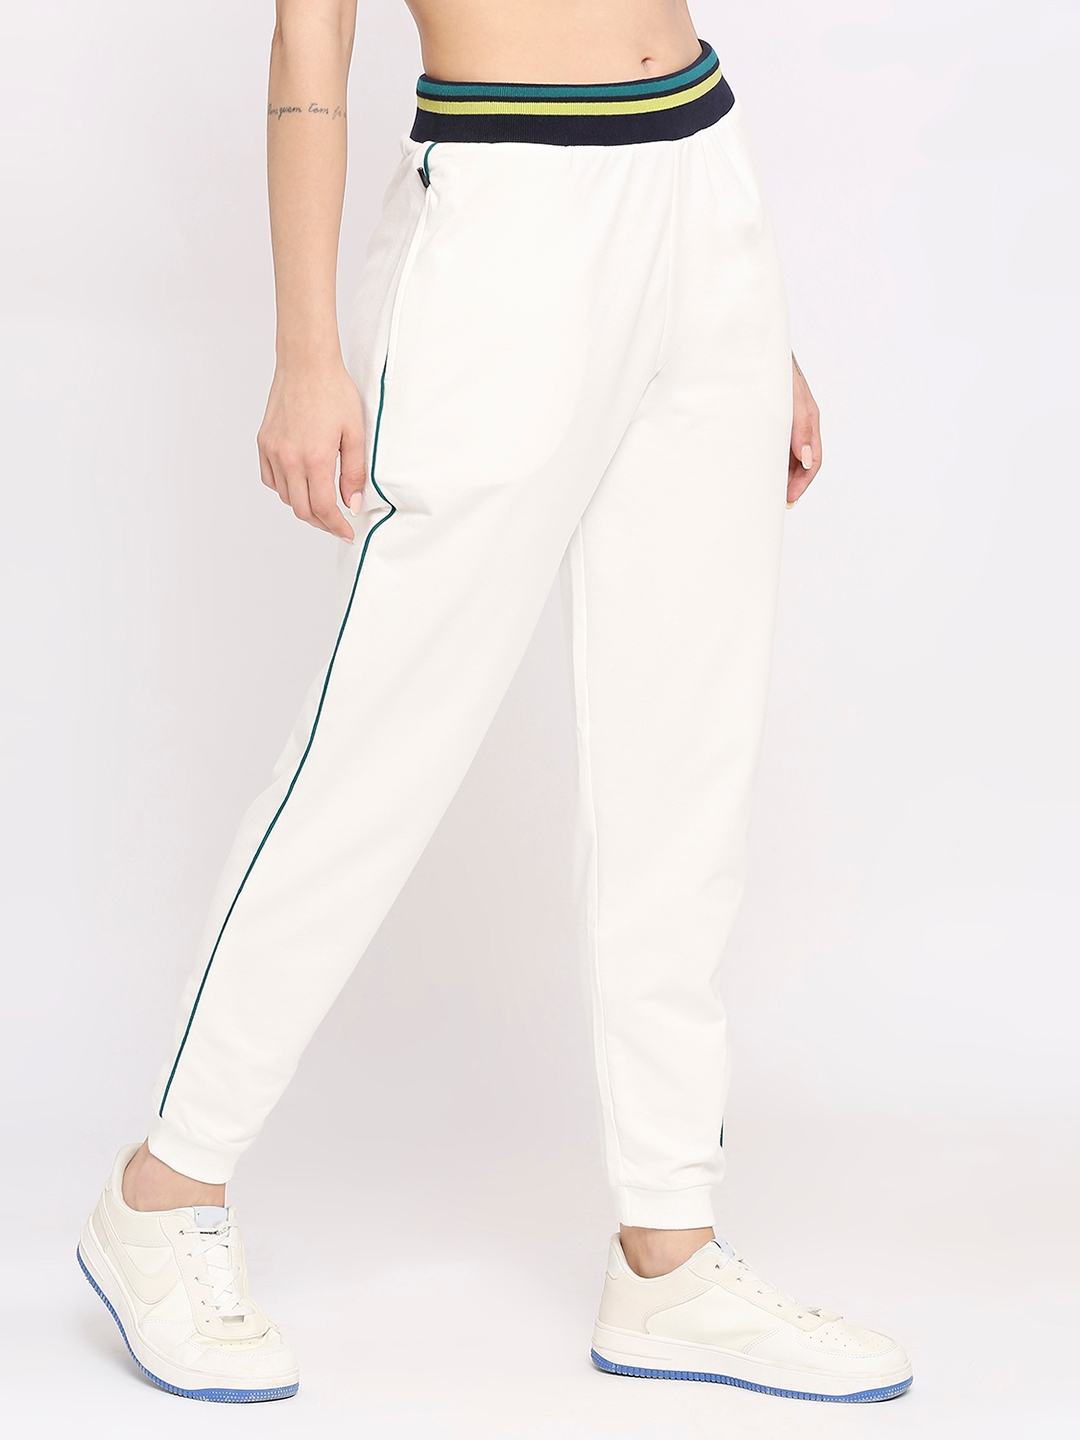 spykar | Spykar Women White Cotton Solid Trackpants 2